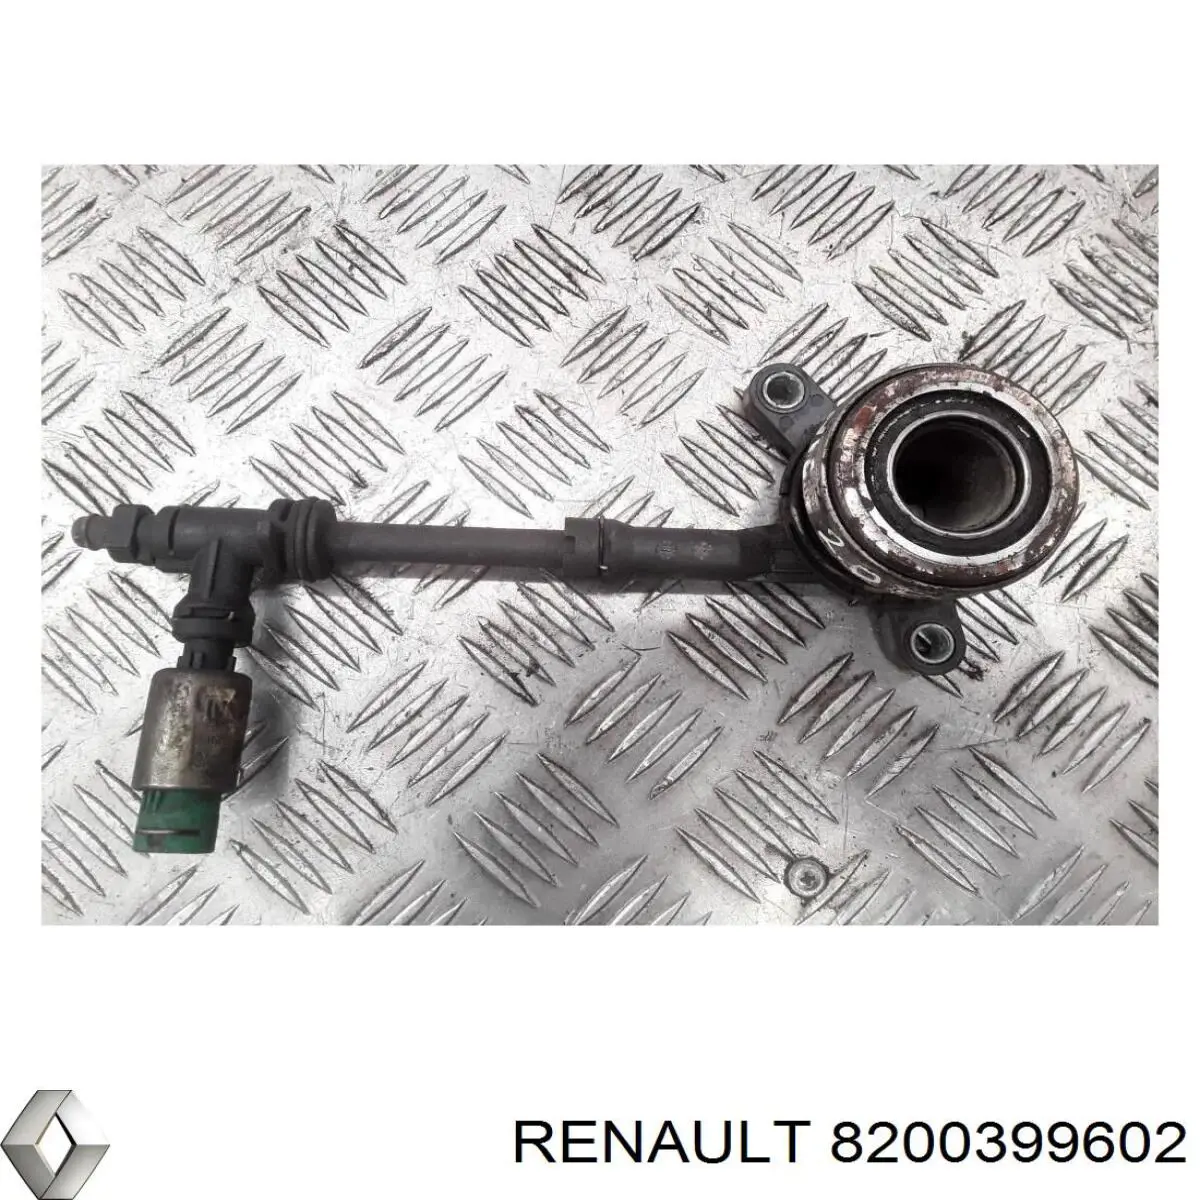 8200399602 Renault (RVI) tubo flexible de embrague